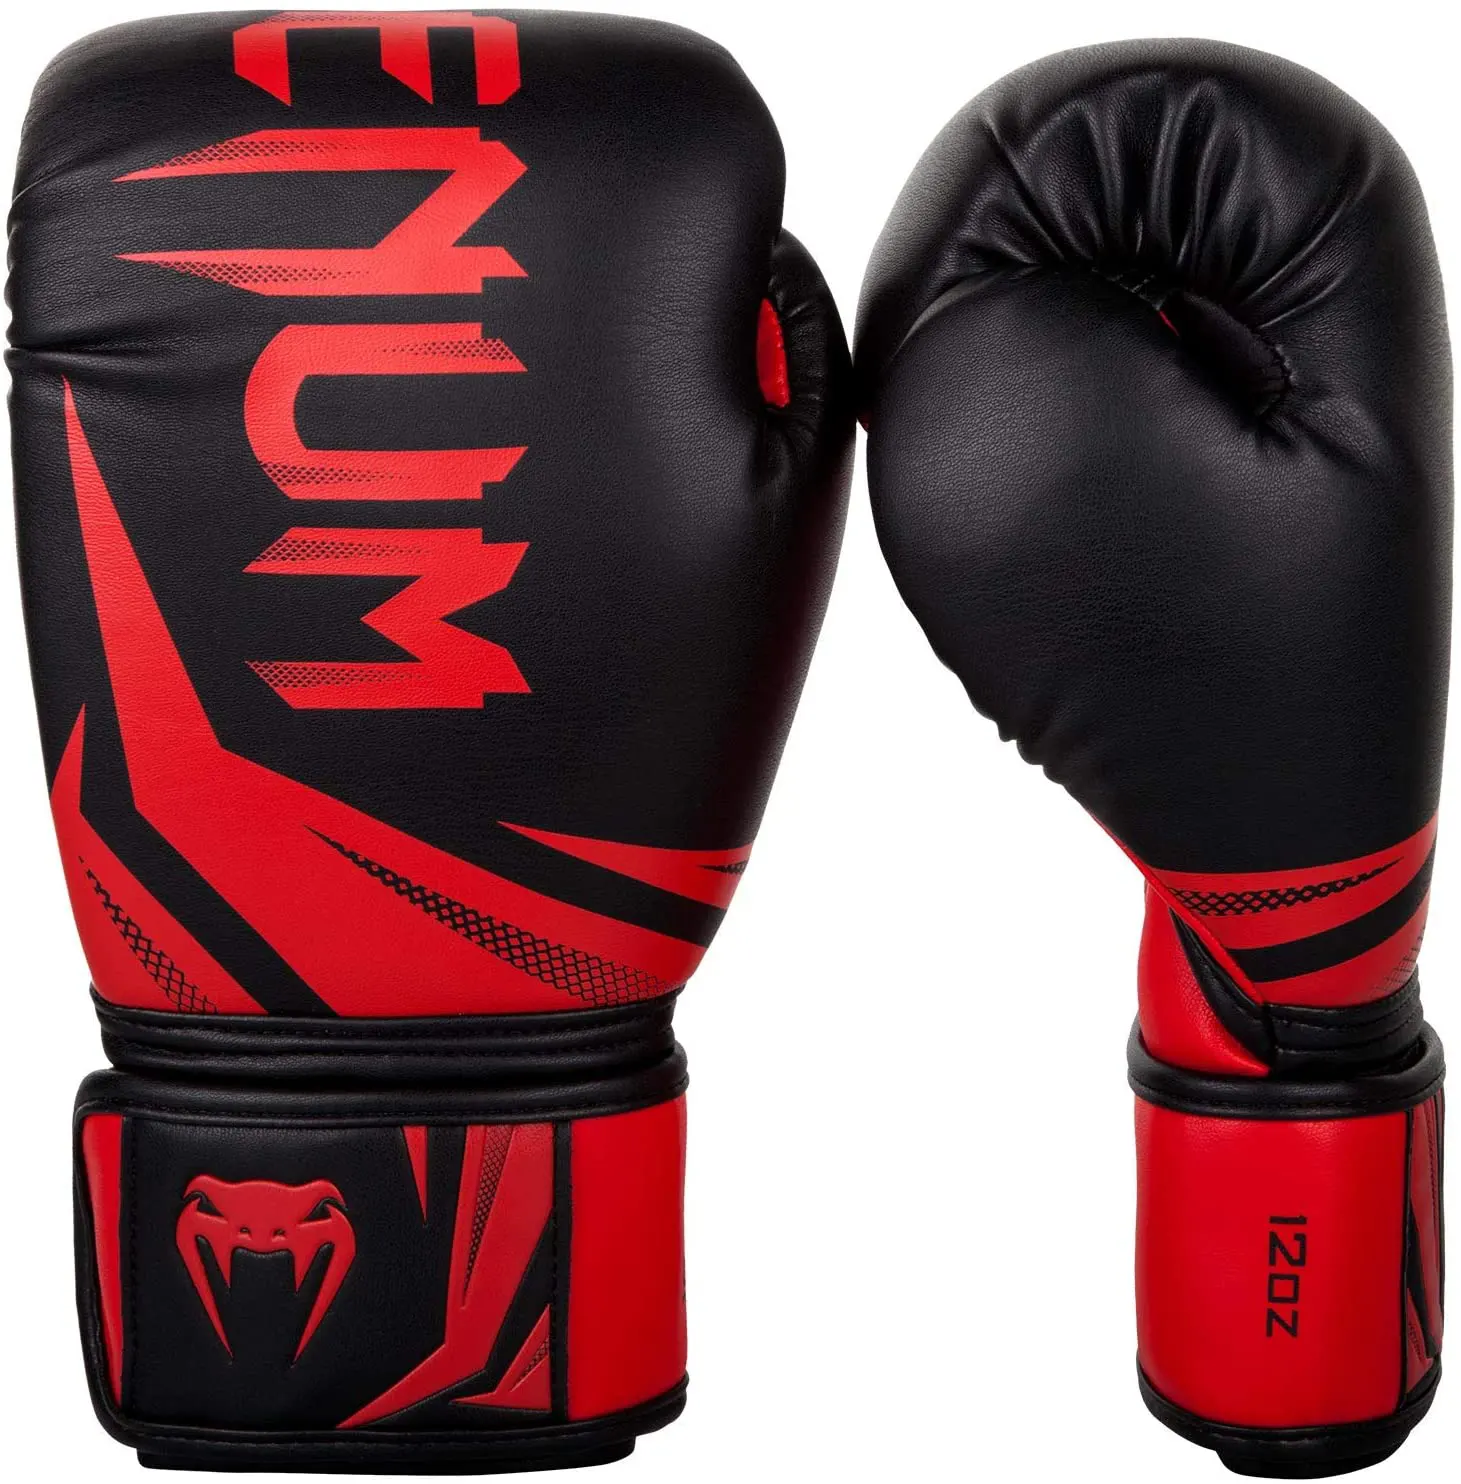 Venum-Challenger-3.0-Boxing-Gloves